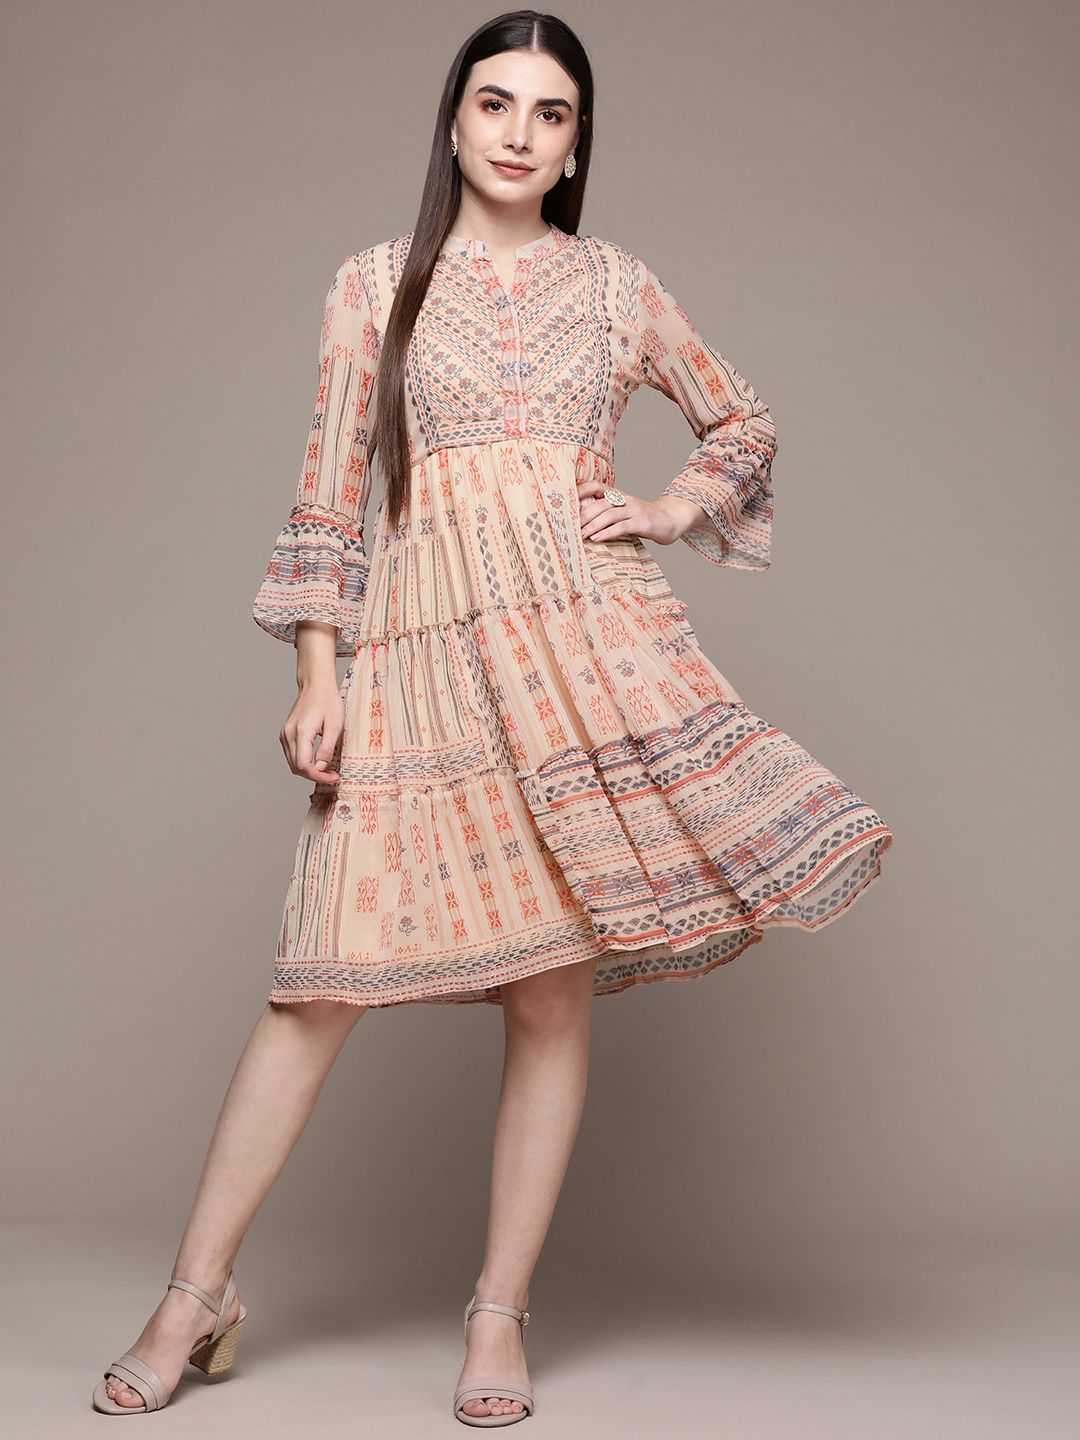 aarke Ritu Kumar Women White & Orange Chiffon Ethnic A-Line Dress Price in India